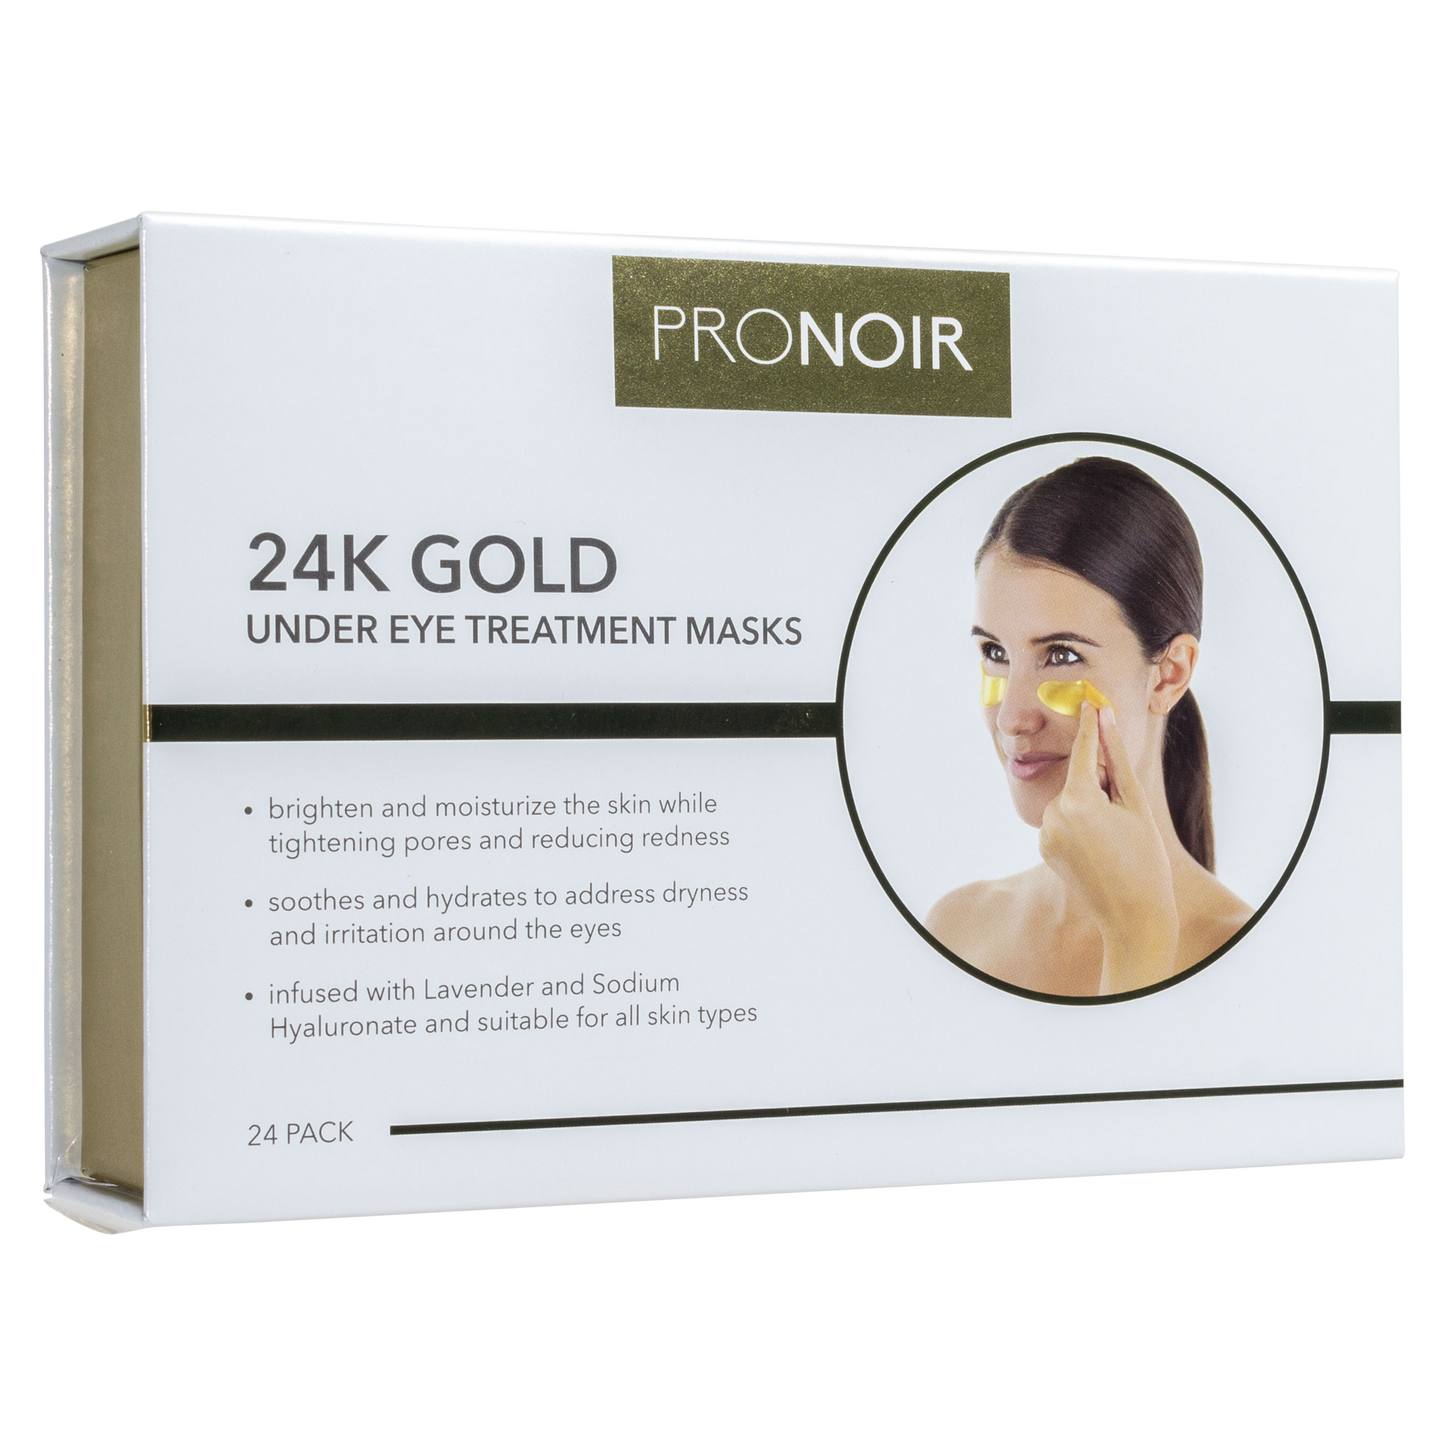 Luxurious 24K Gold Under Eye Treatment Masks - 24 Pairs